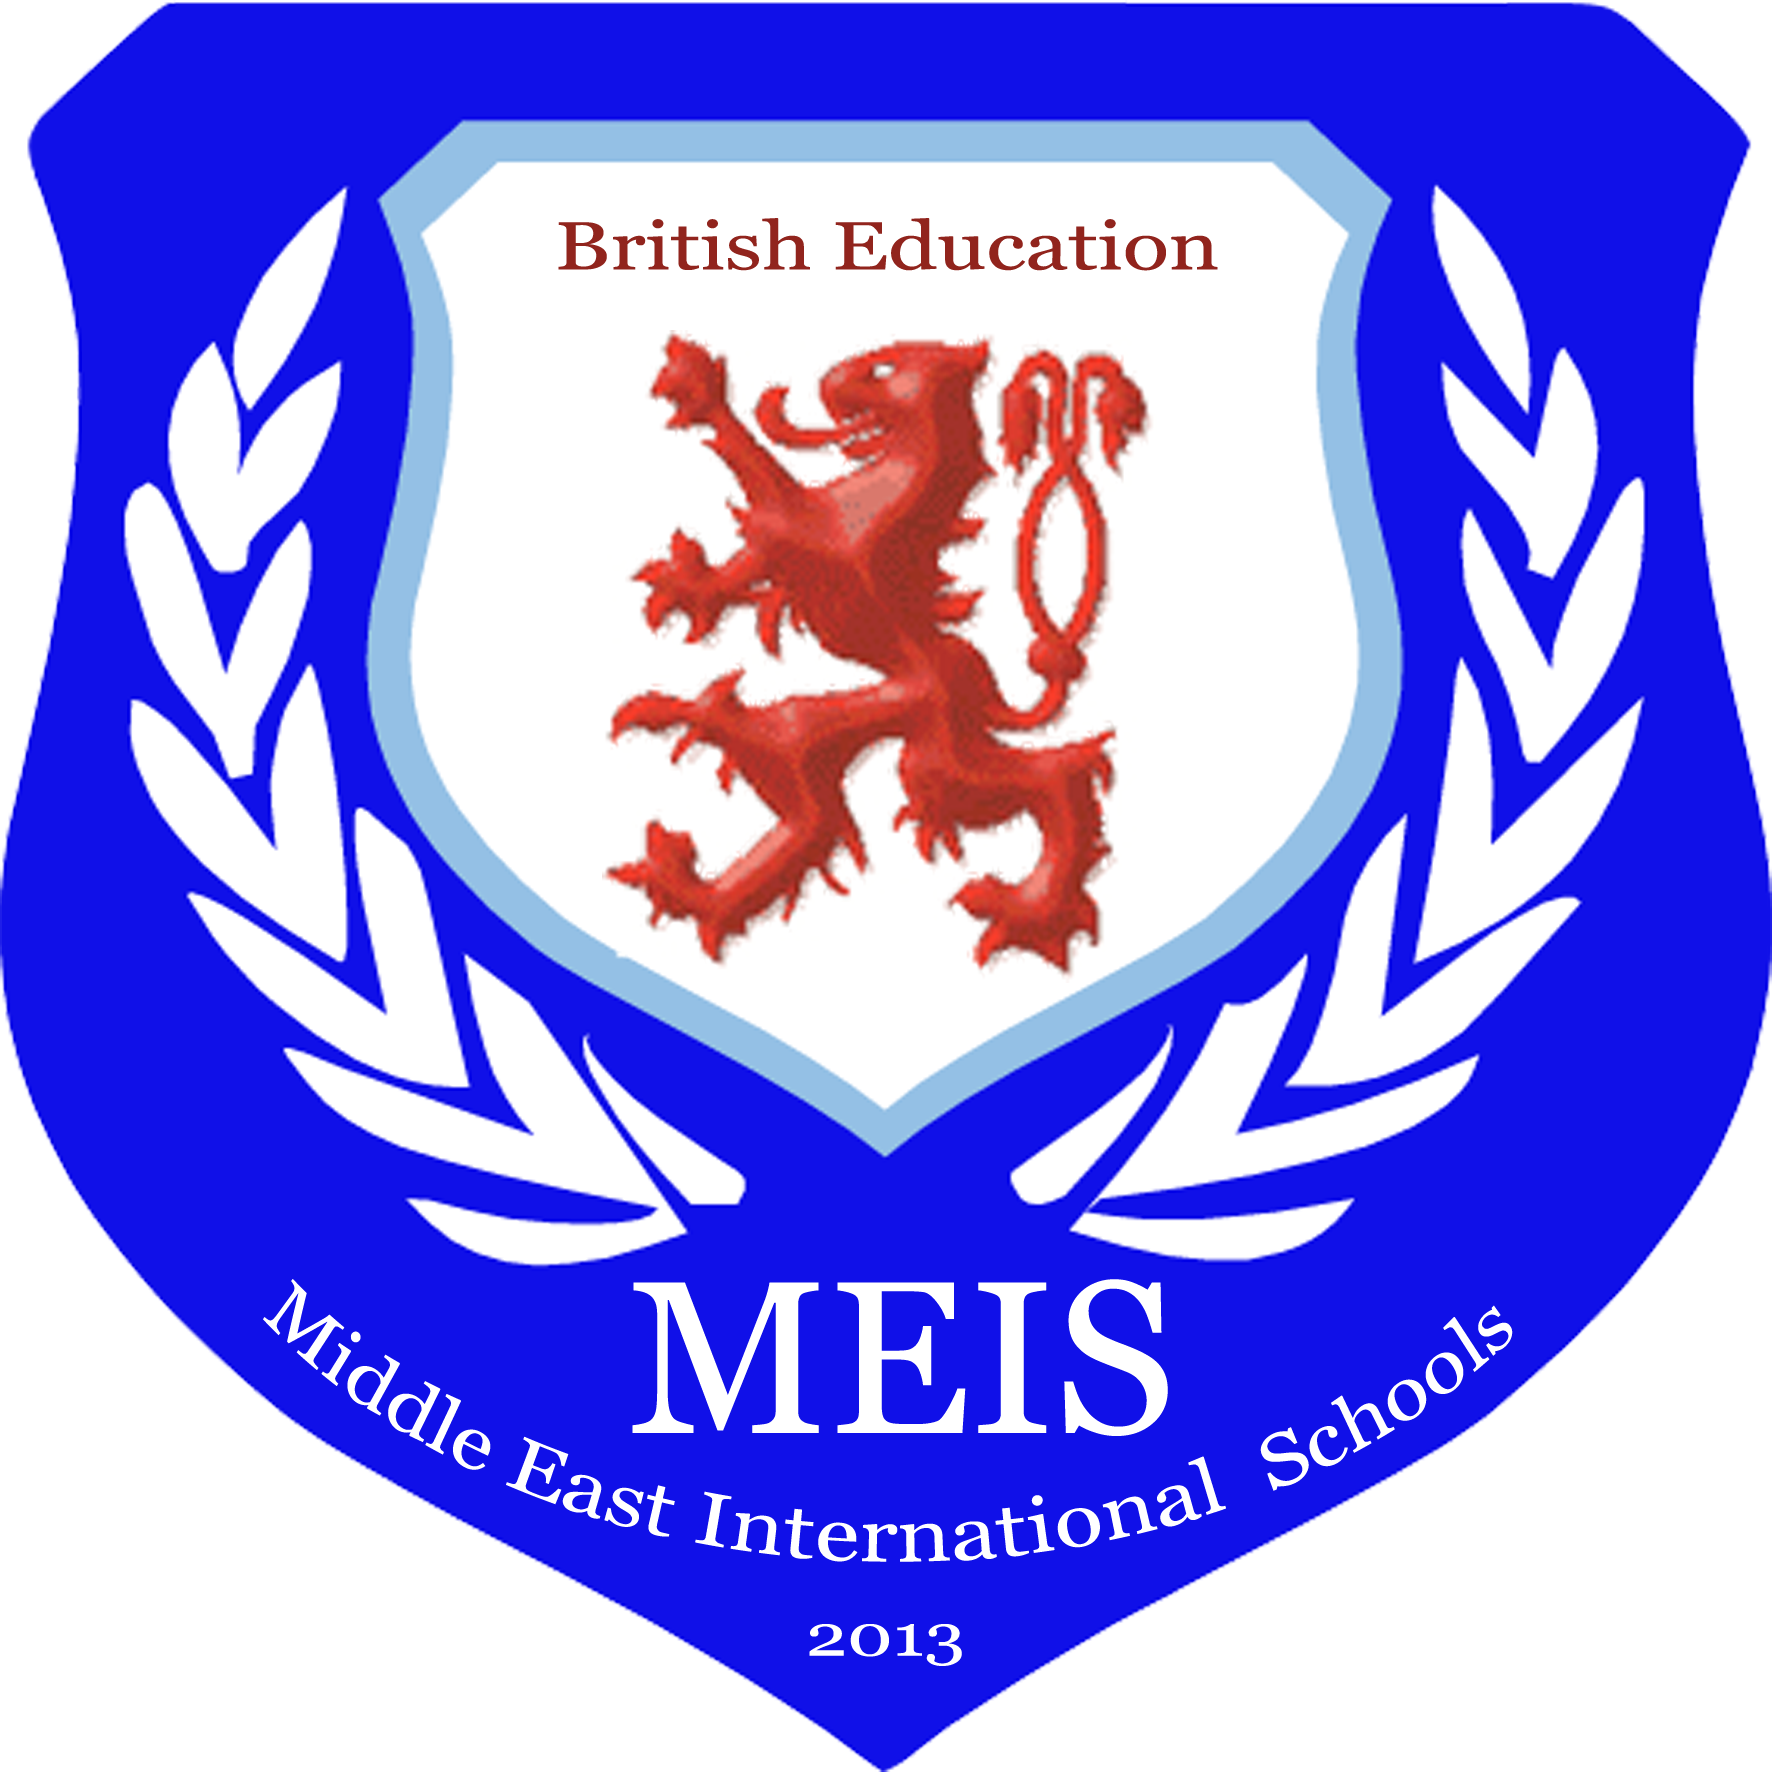 Middle East International Schools